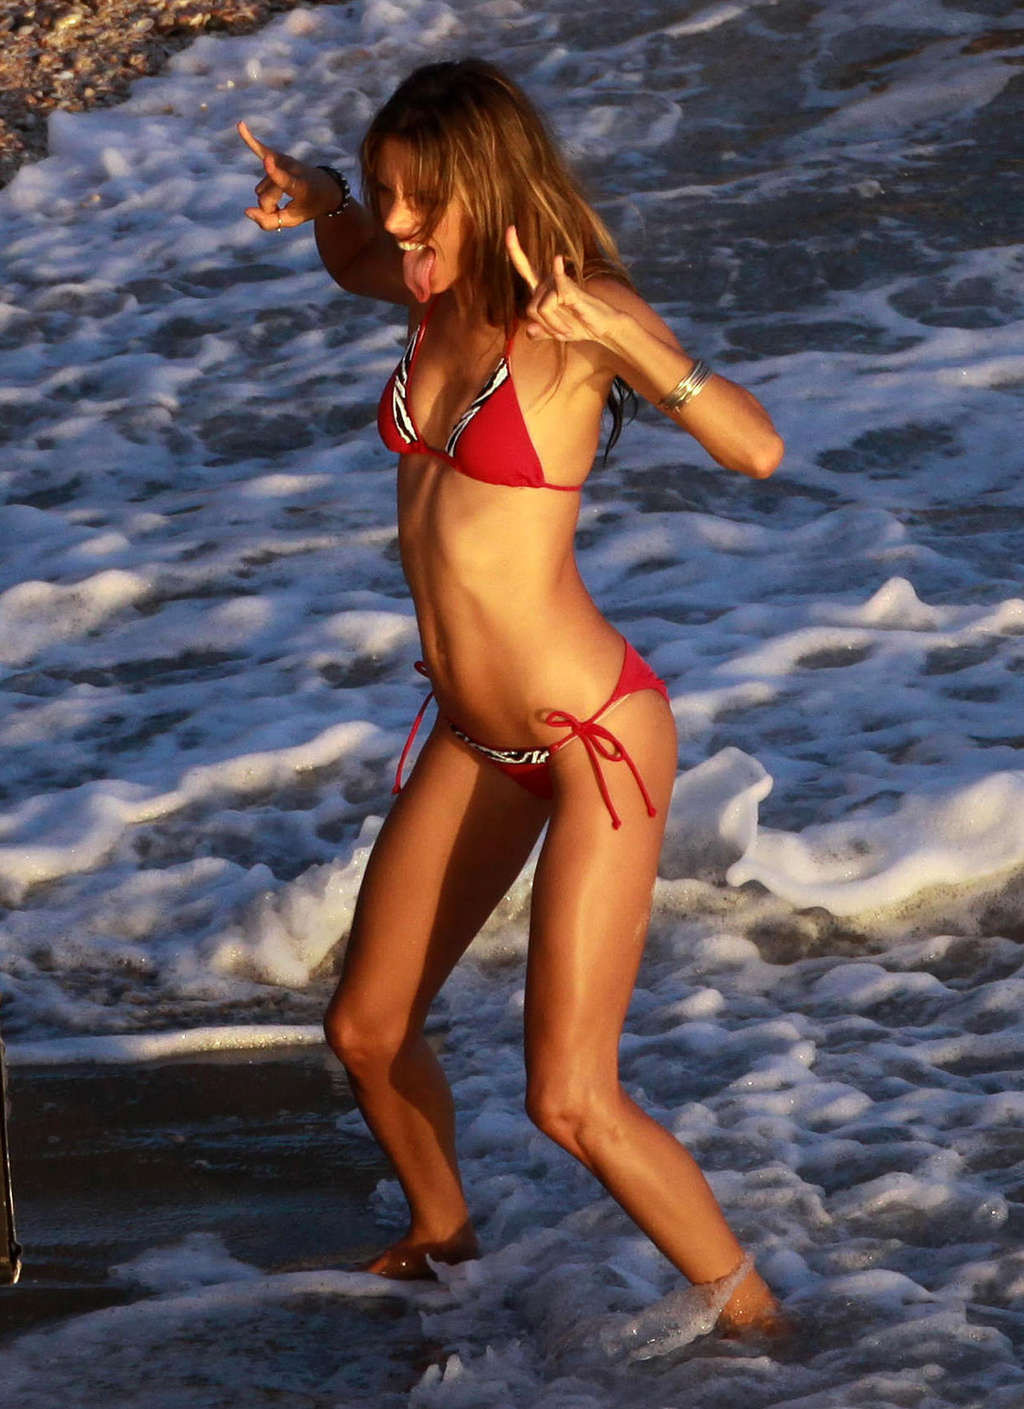 Alessandra Ambrosio looking very sexy in bikini on beach for some photoshoot #79486900